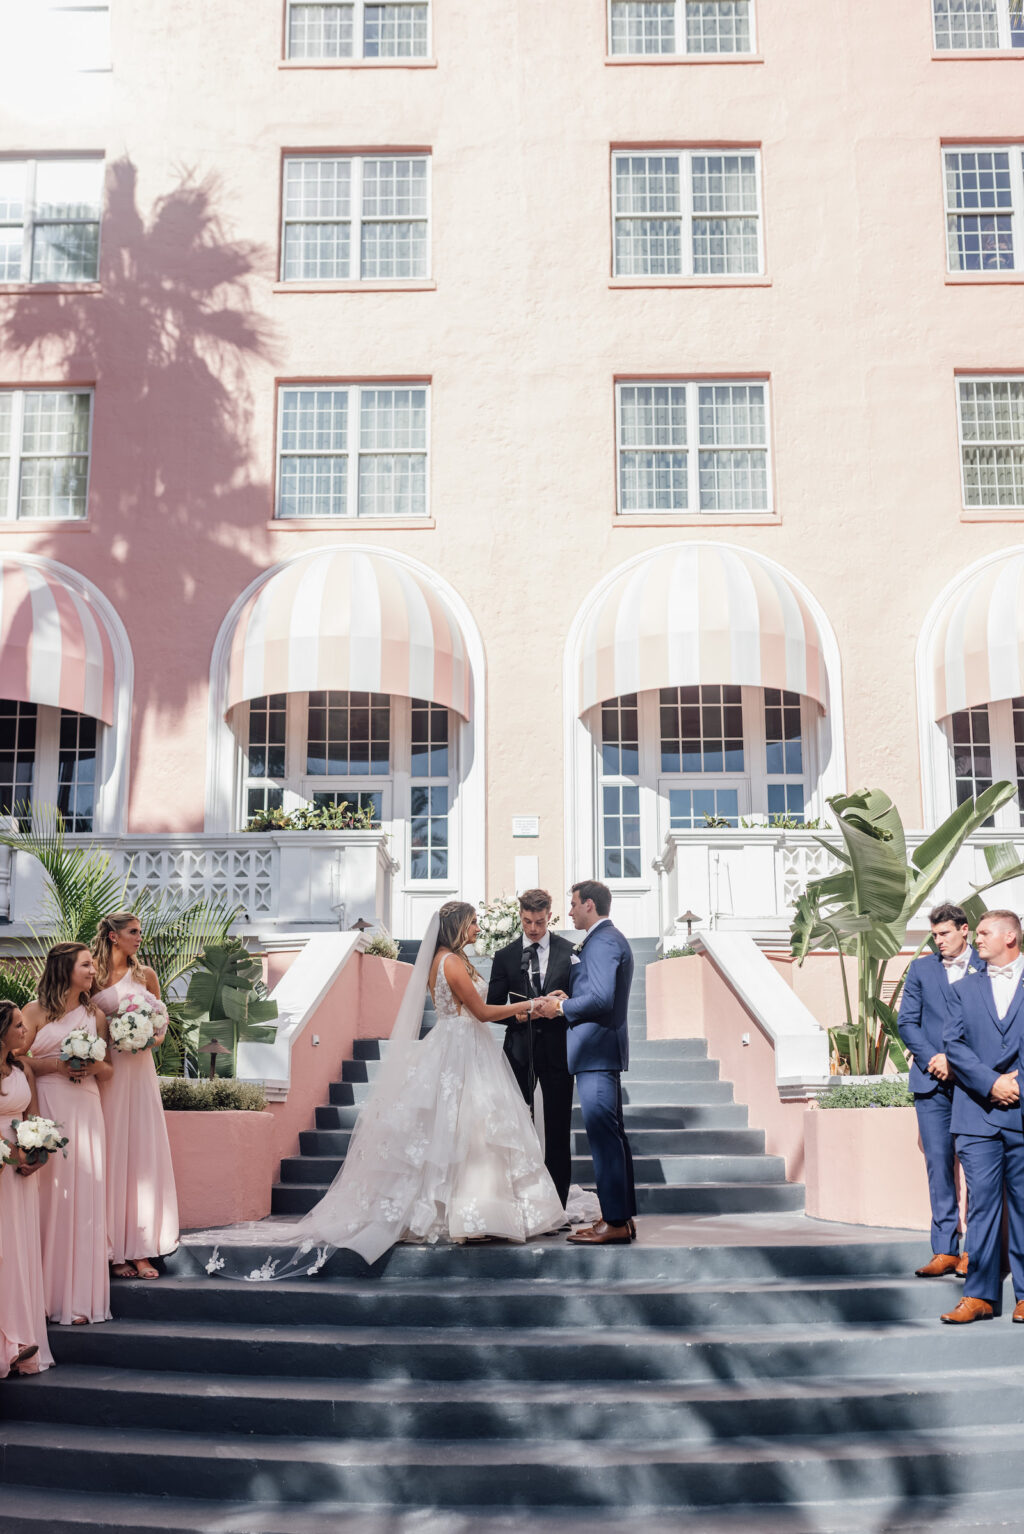 Bride and Groom Exchange Vows Wedding Portrait | Outdoor Beach Hotel Wedding Ceremony | Tampa Wedding Venue the Don Cesar